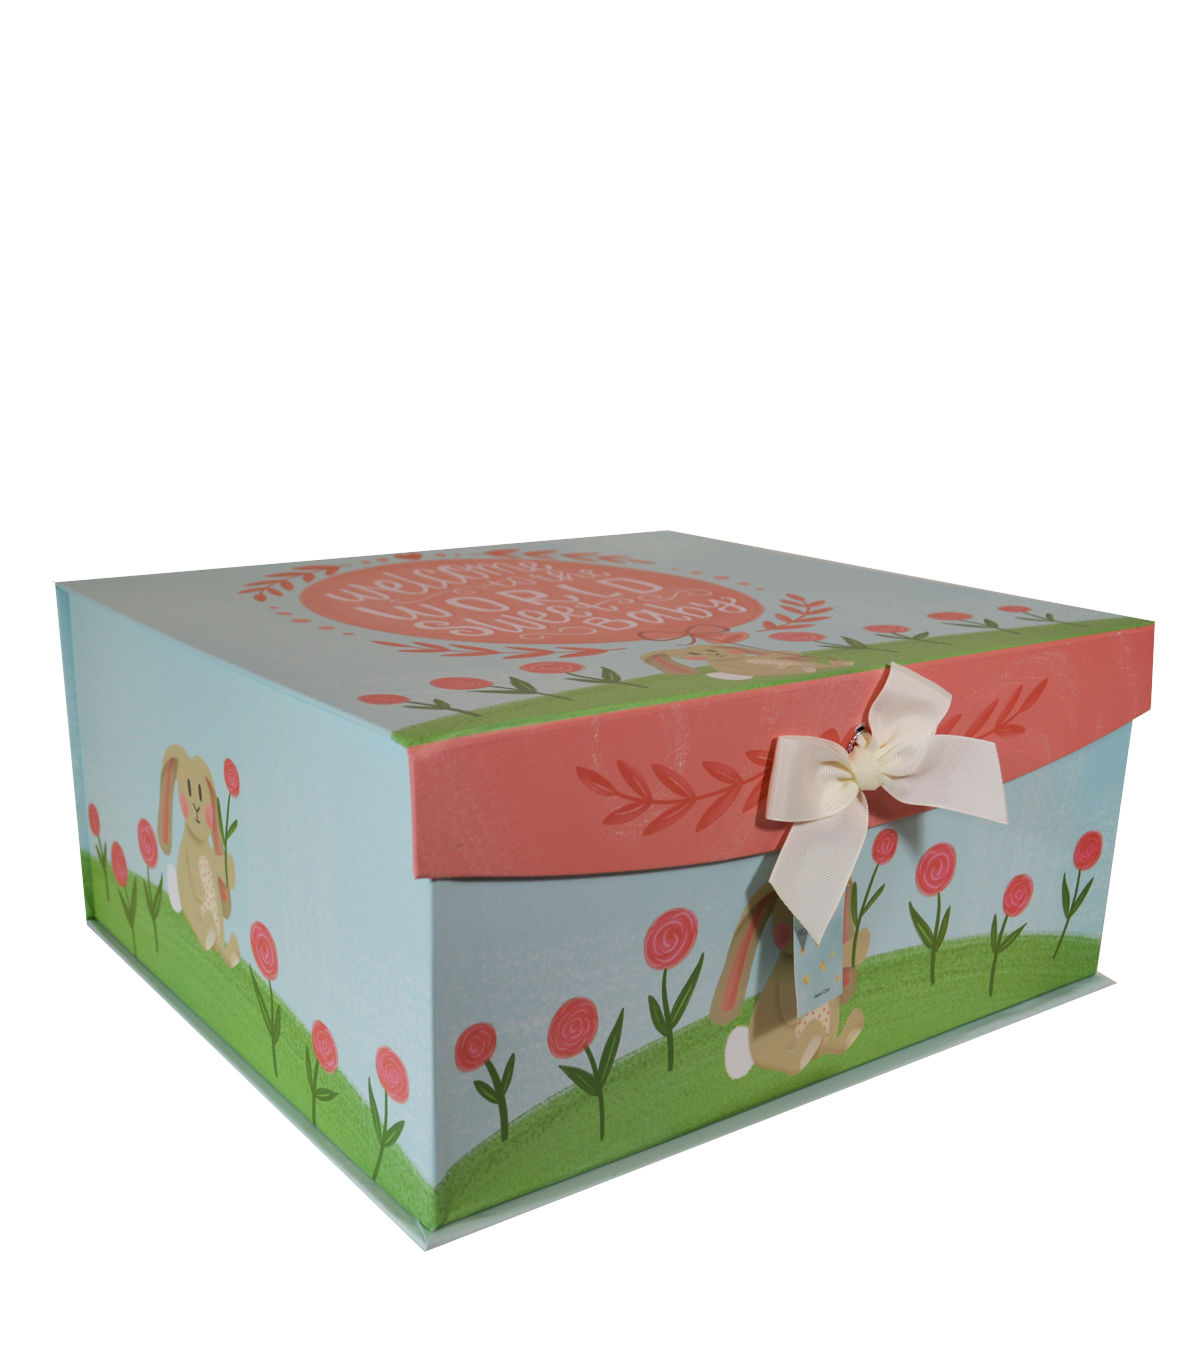 Decorative Storage - Decorative Boxes and Bins | JOANN